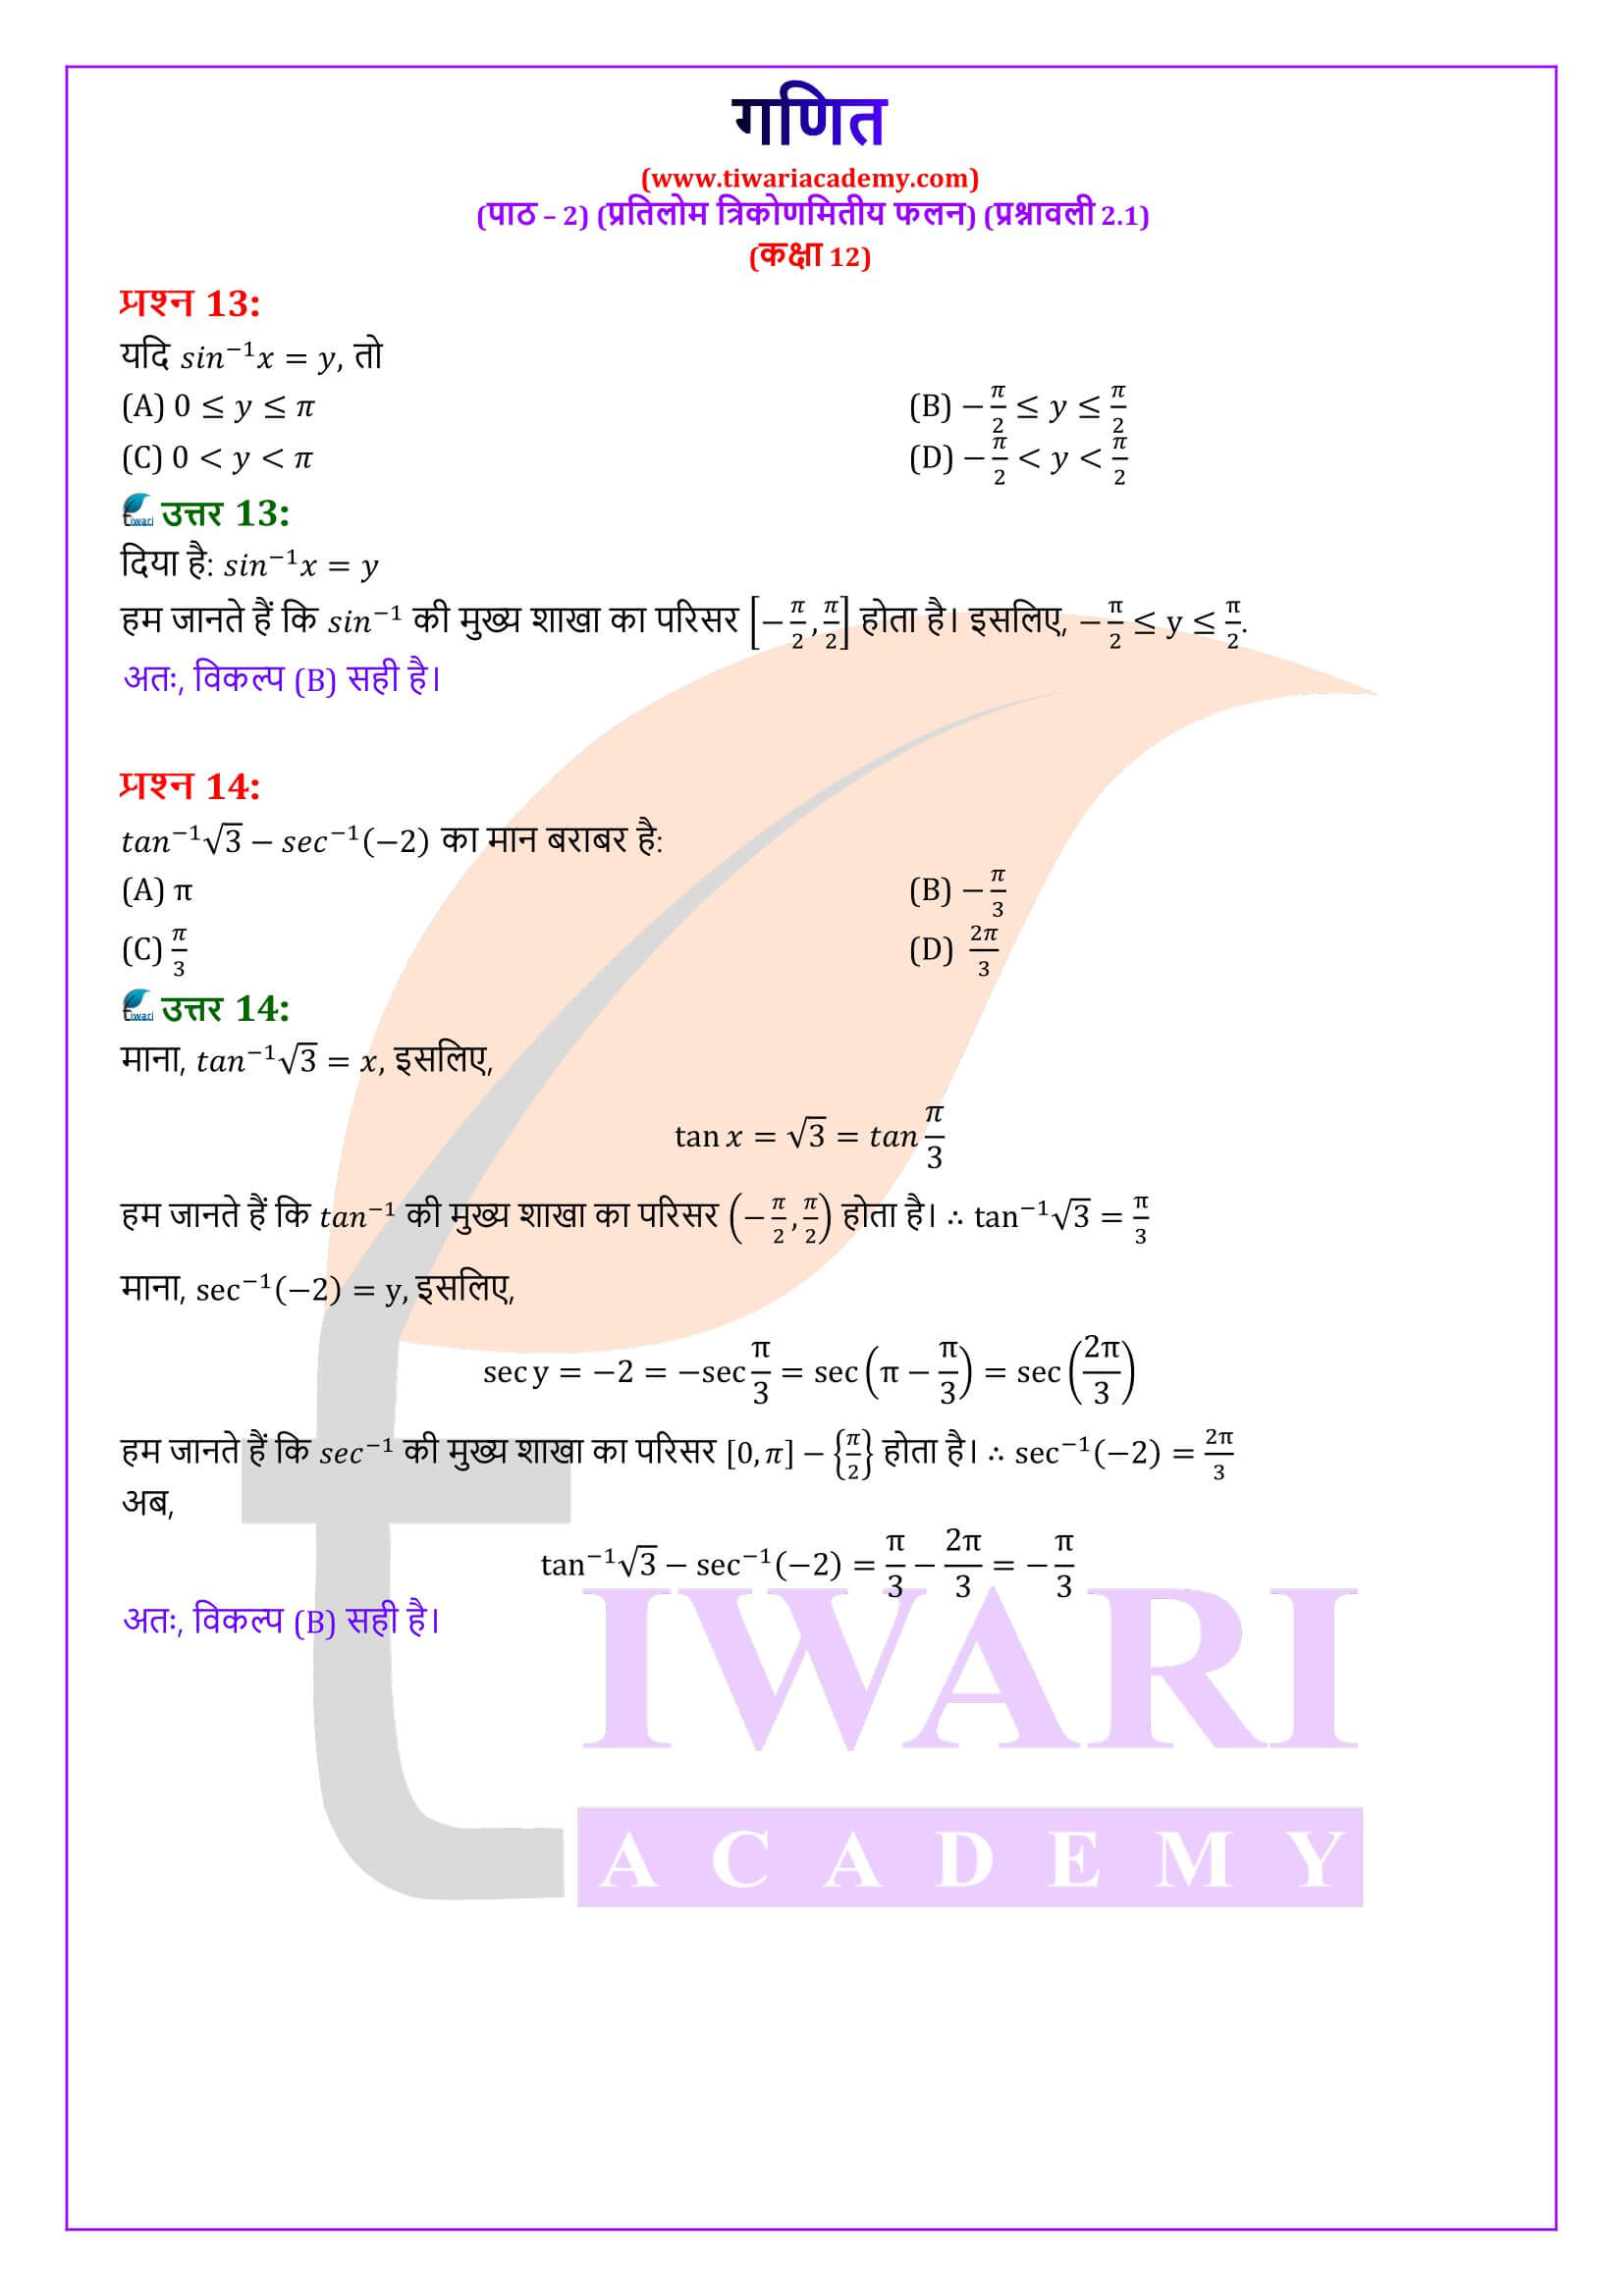 कक्षा 12 गणित अध्याय 2 प्रश्नावली 2.1